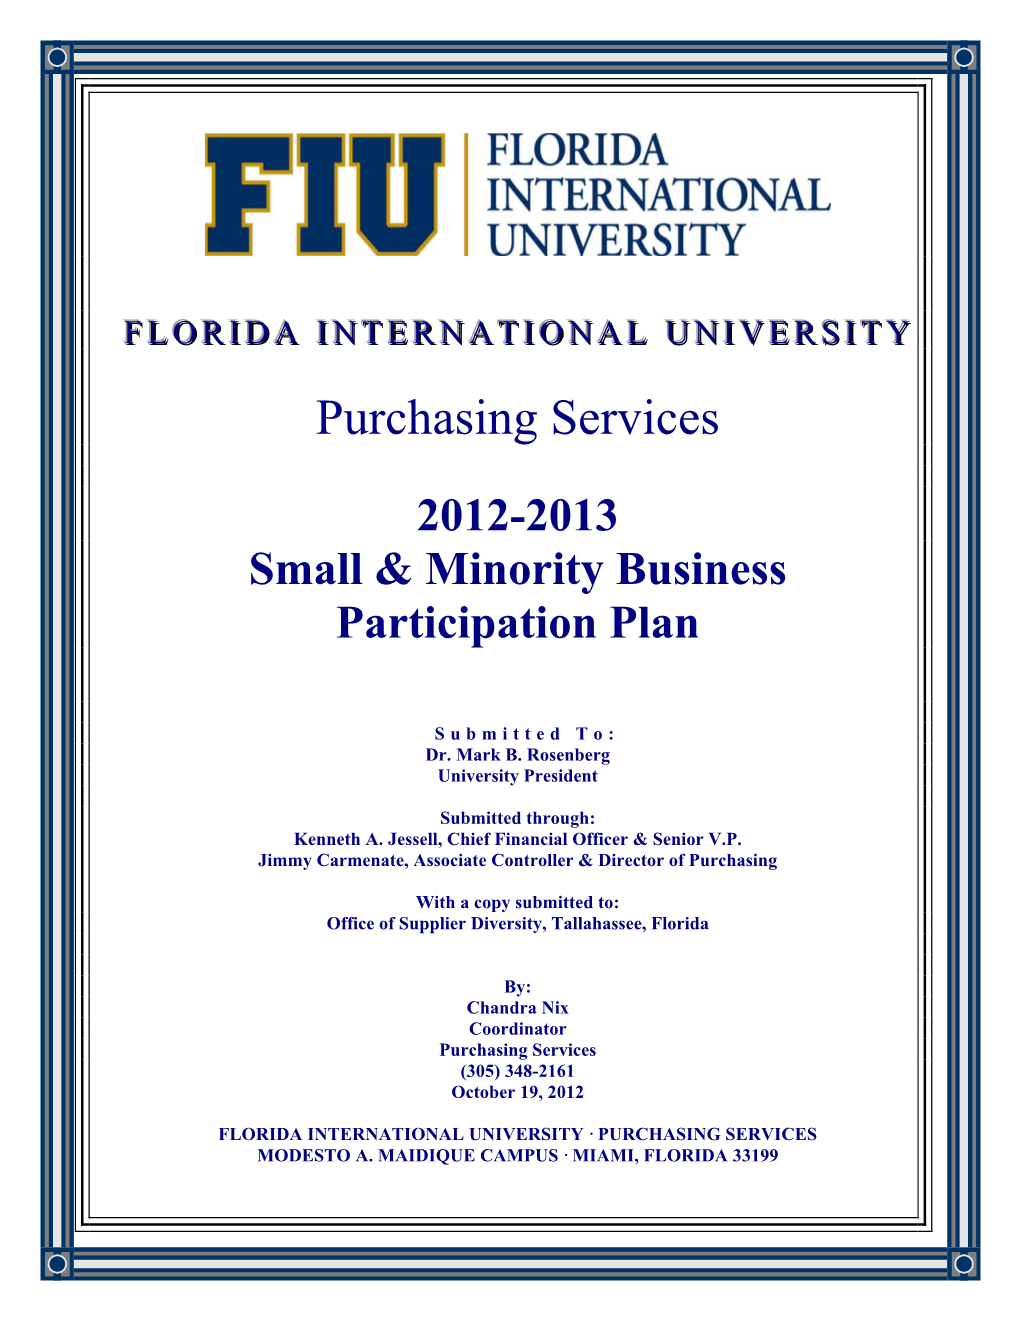 Florida International University · Purchasing Services Modesto A